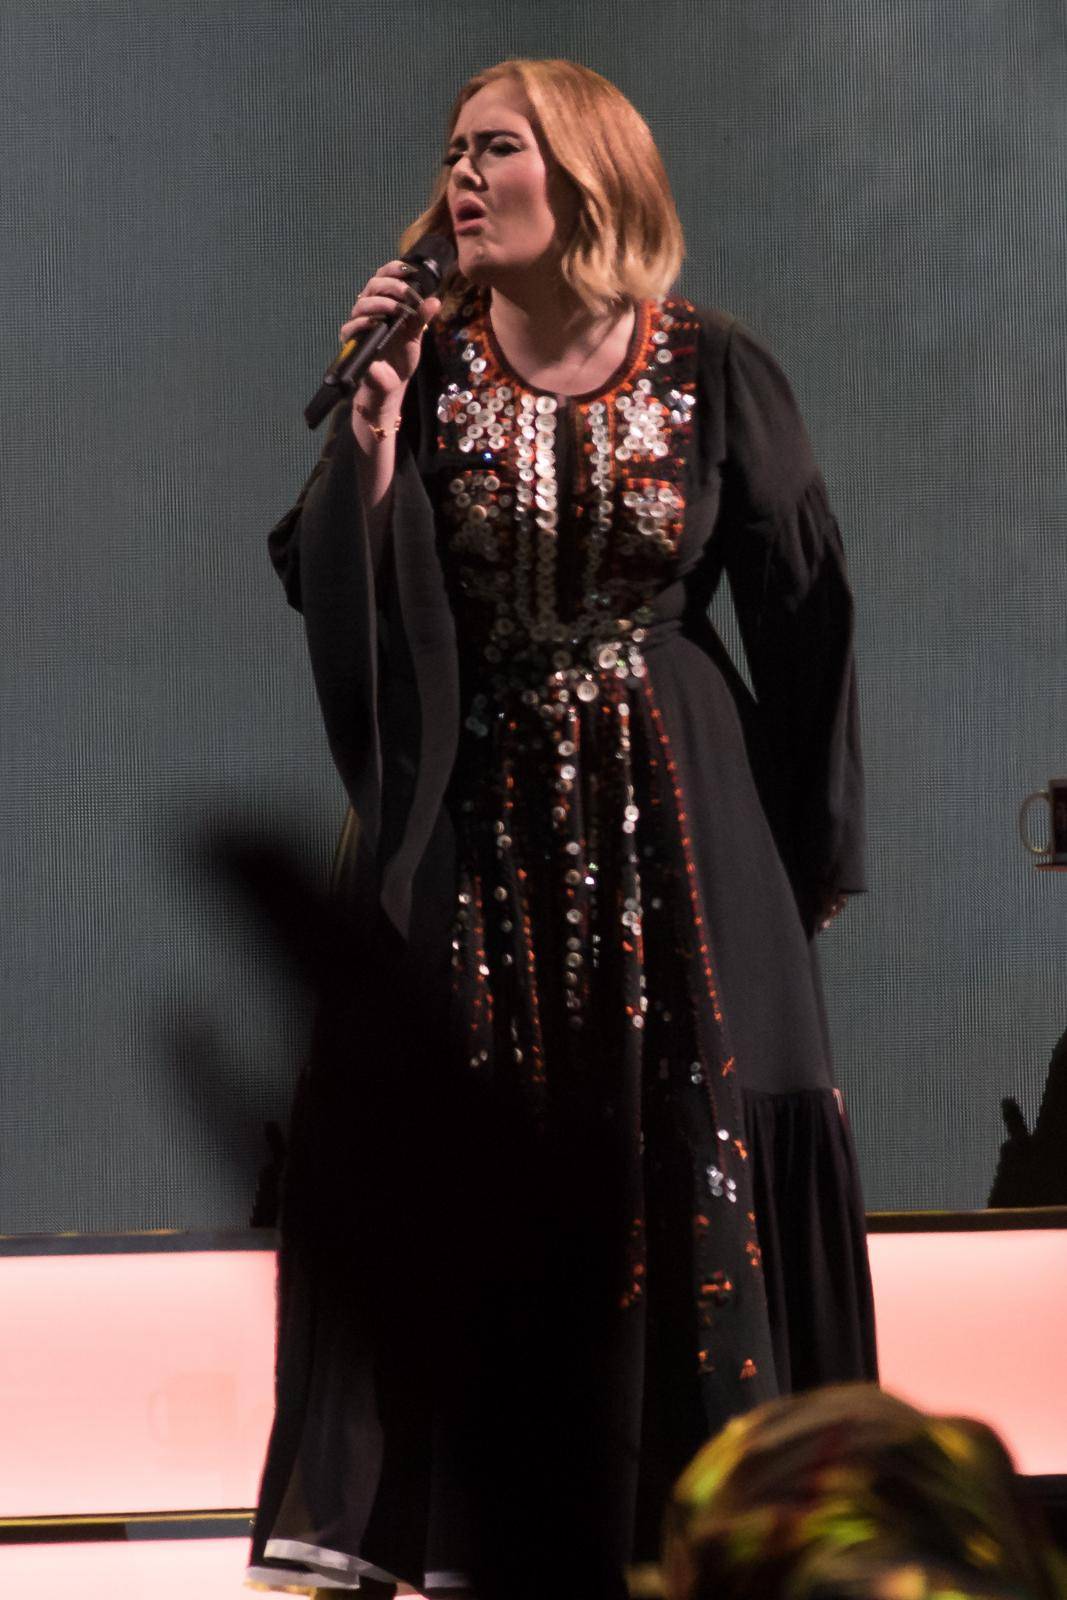 Adele headlines Glastonbury Festival 2016